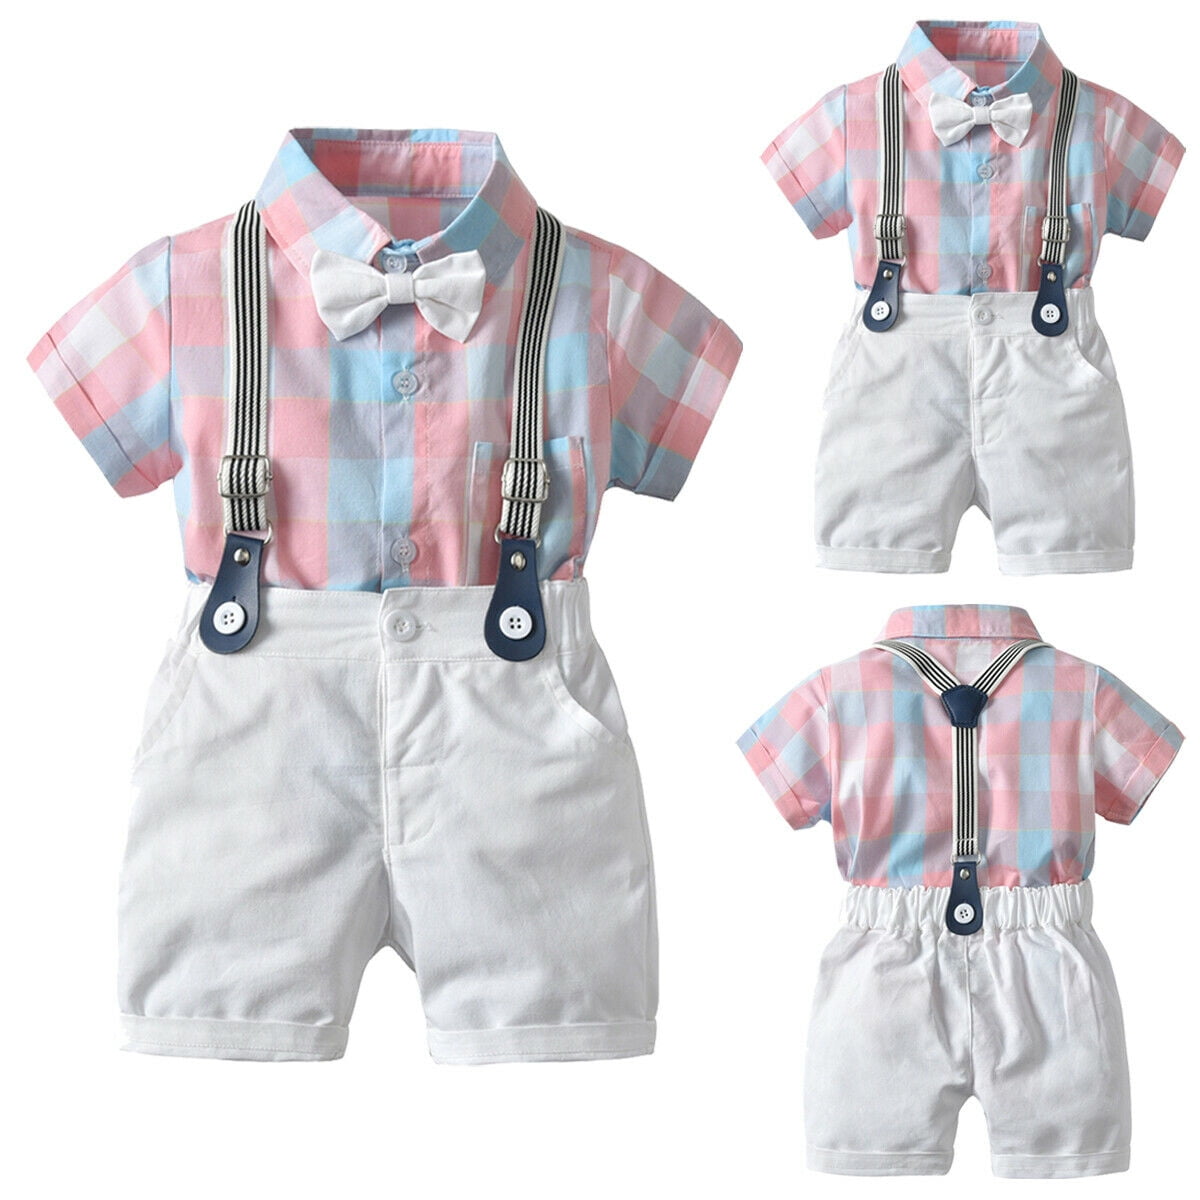 Toddler Kids Baby Boys Shirt Tops+Short Pants Gentleman Outfits Clothes 2PCS Set 